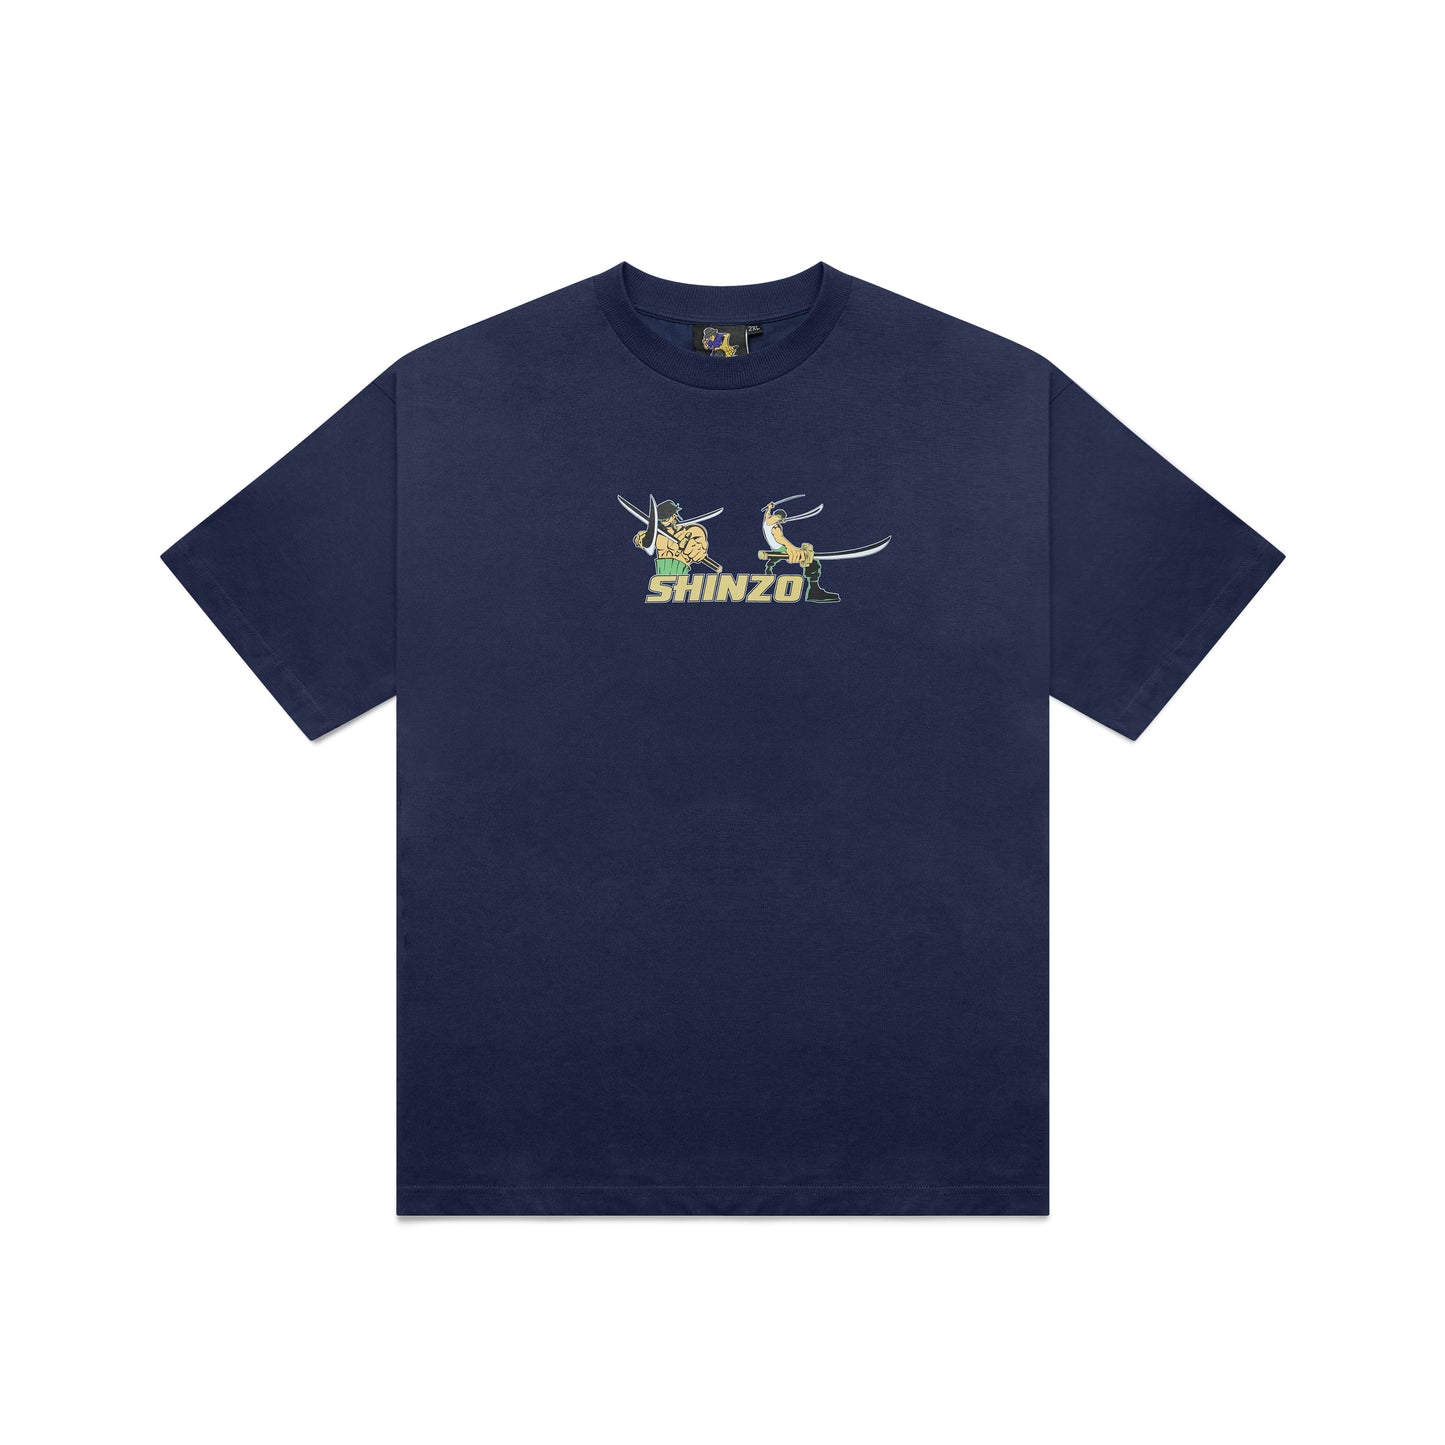 3 Swordz Style Navy Blue T-Shirt